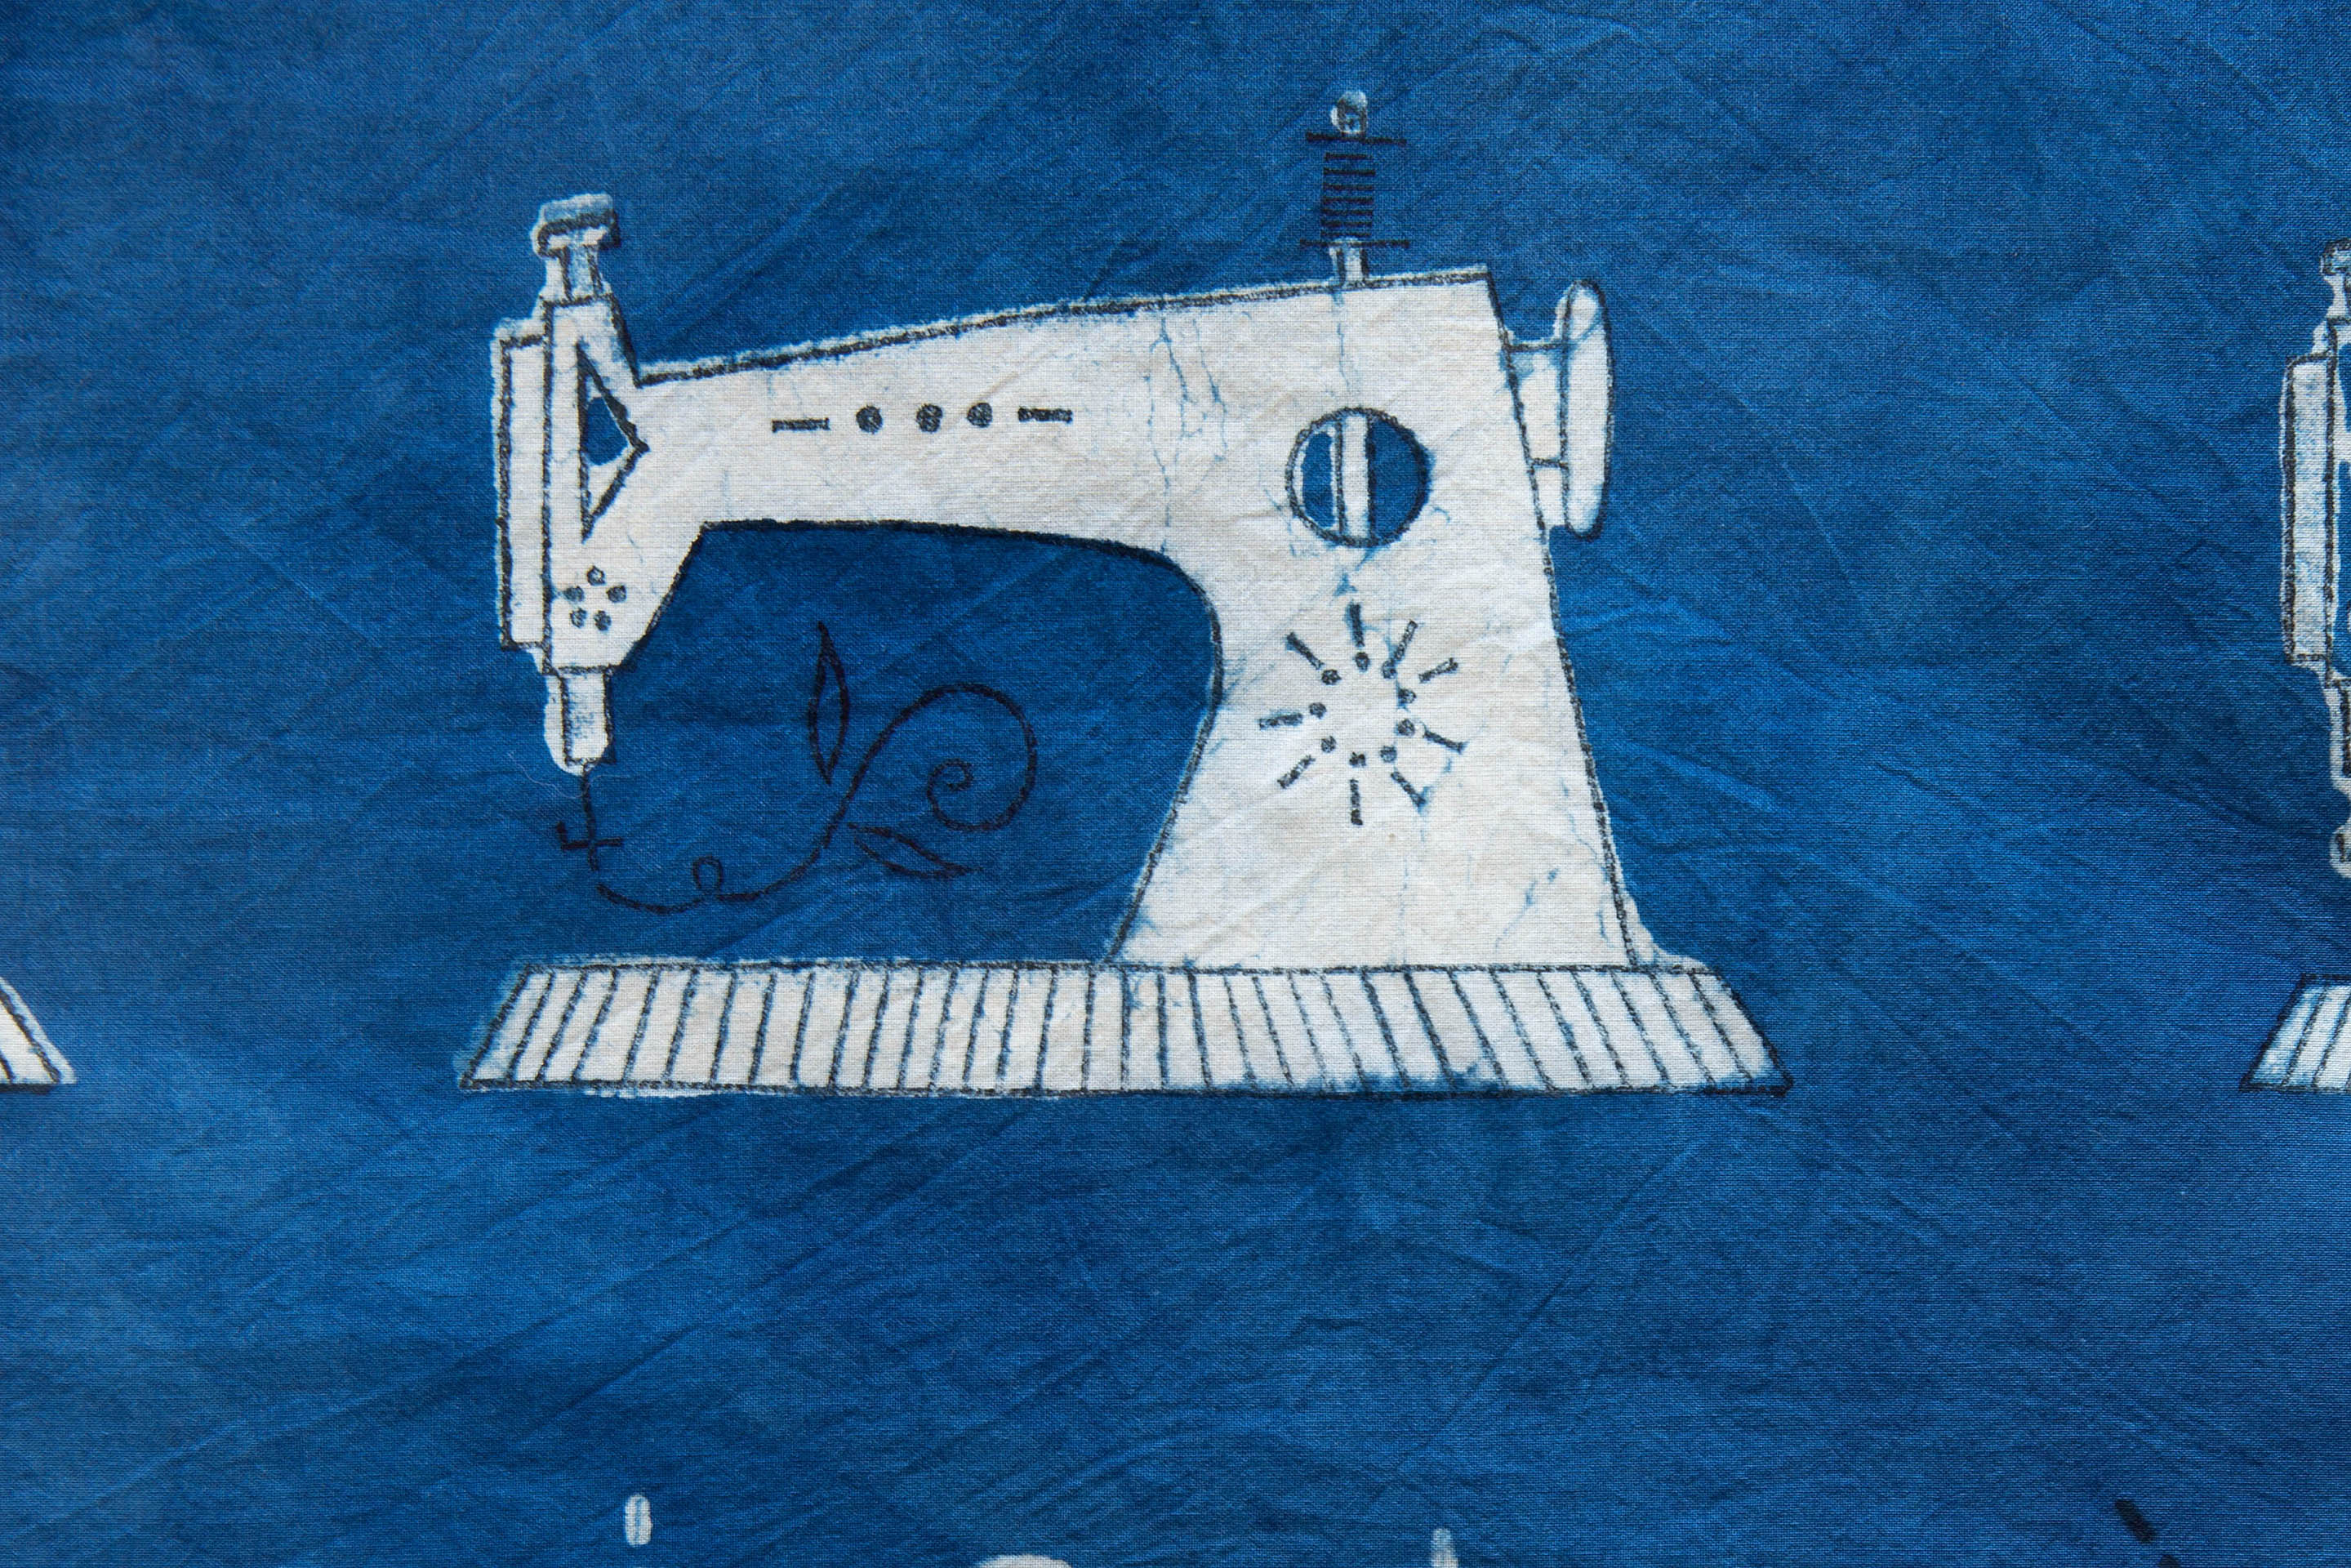 sewing machine on blue fabric